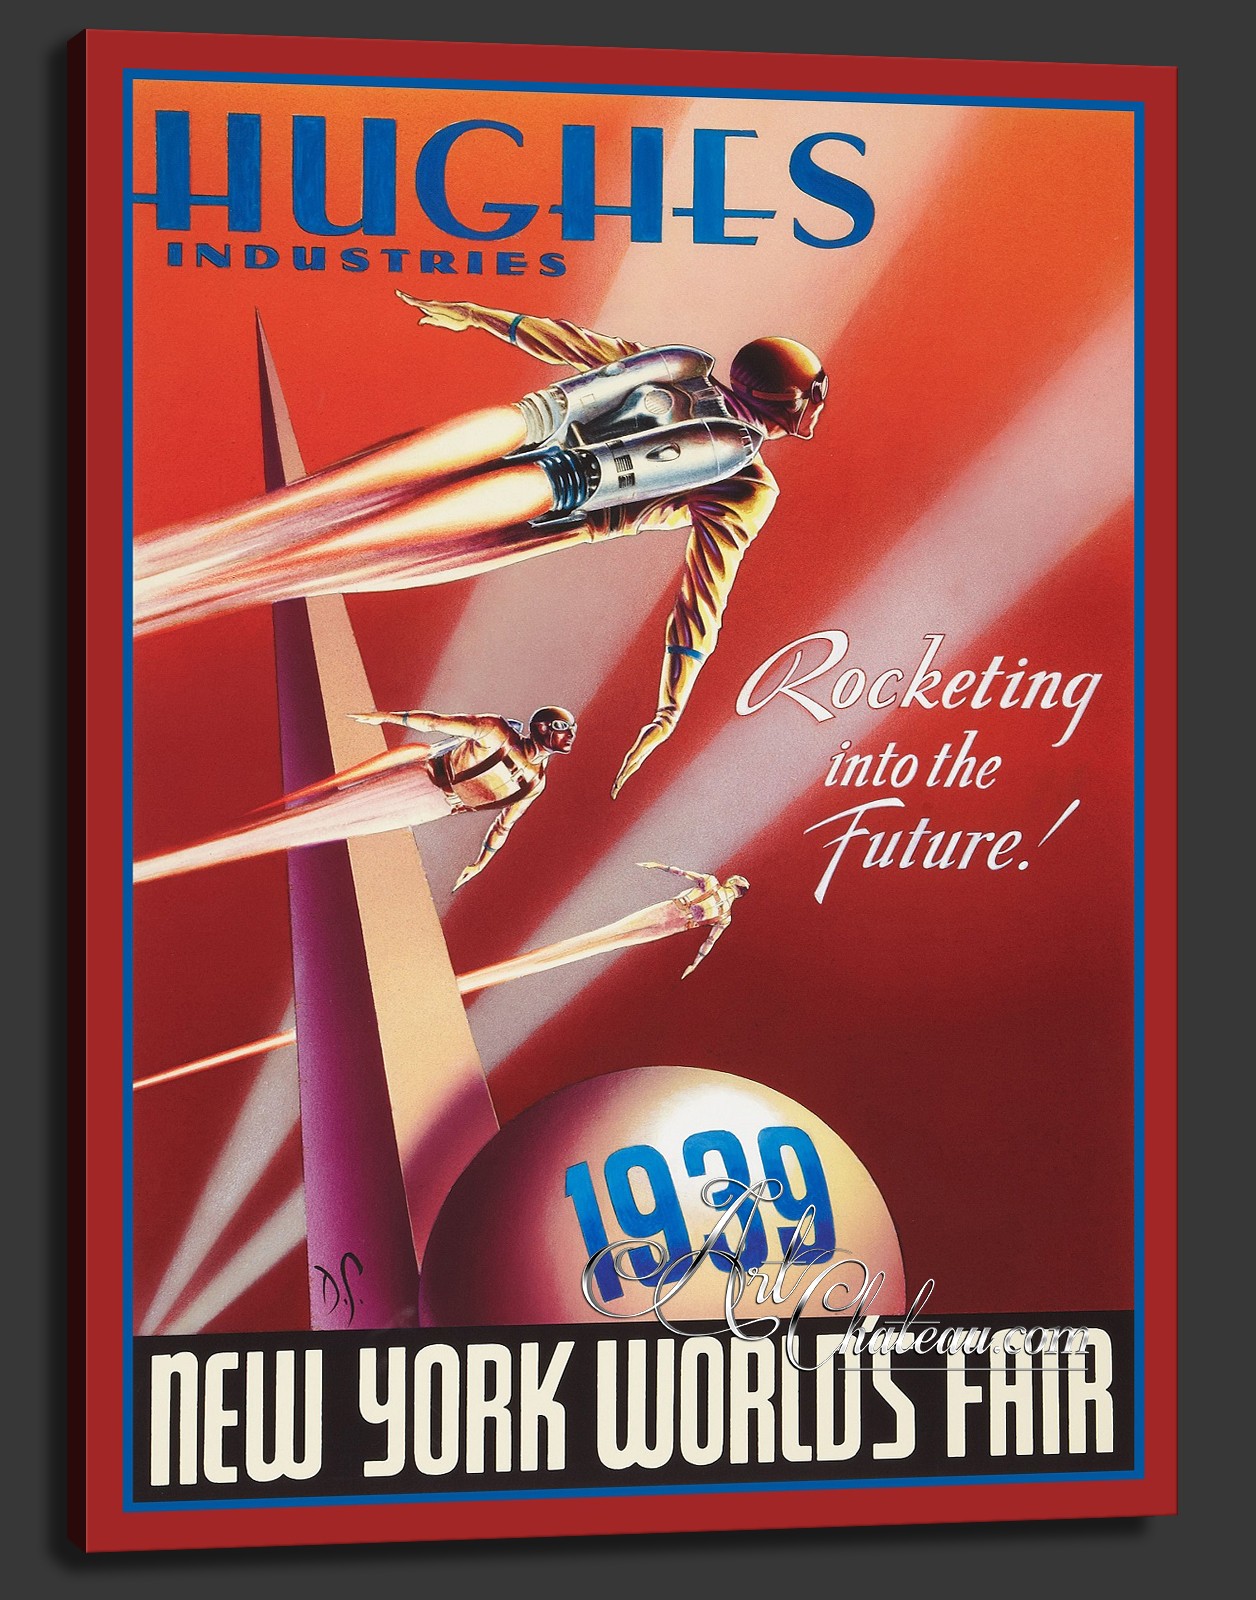 Vintage Style Art Poster, New York World's Fair